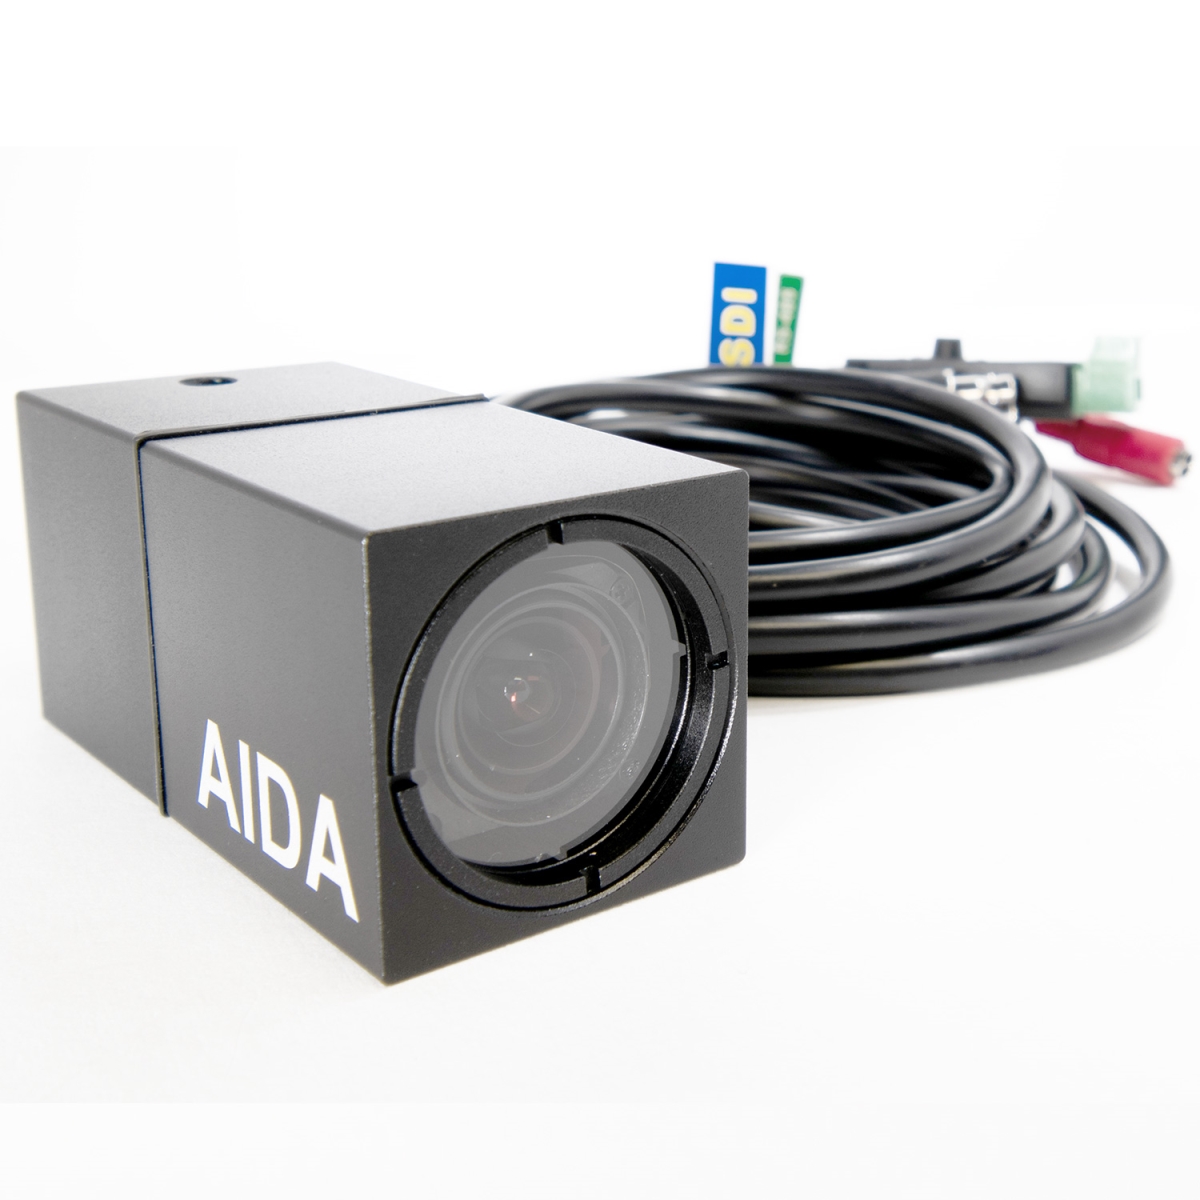 AIDA-HD-X37-IP67 3.5x Optical Zoom POV Camera -  Aida Imaging